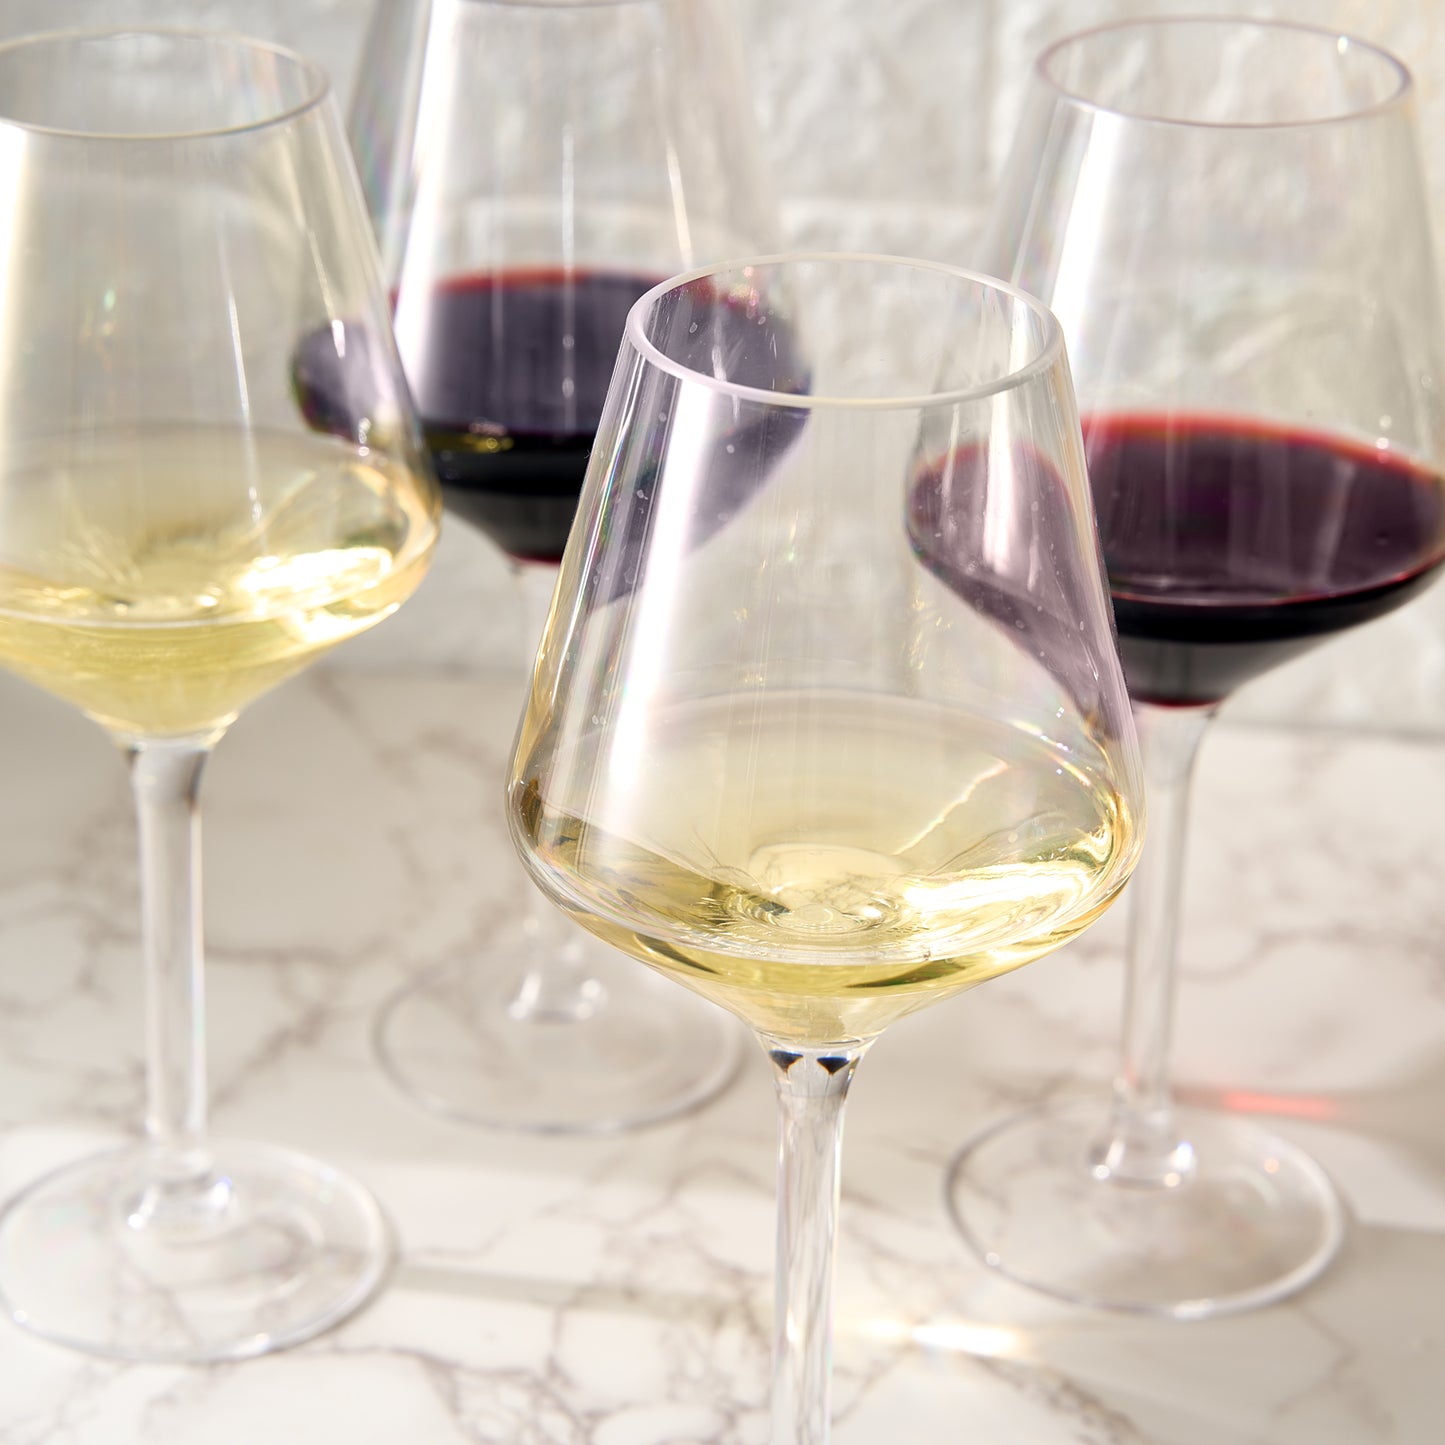 Barcelona Stemless Wine Glassware, Unbreakable Acrylic, Set of 4